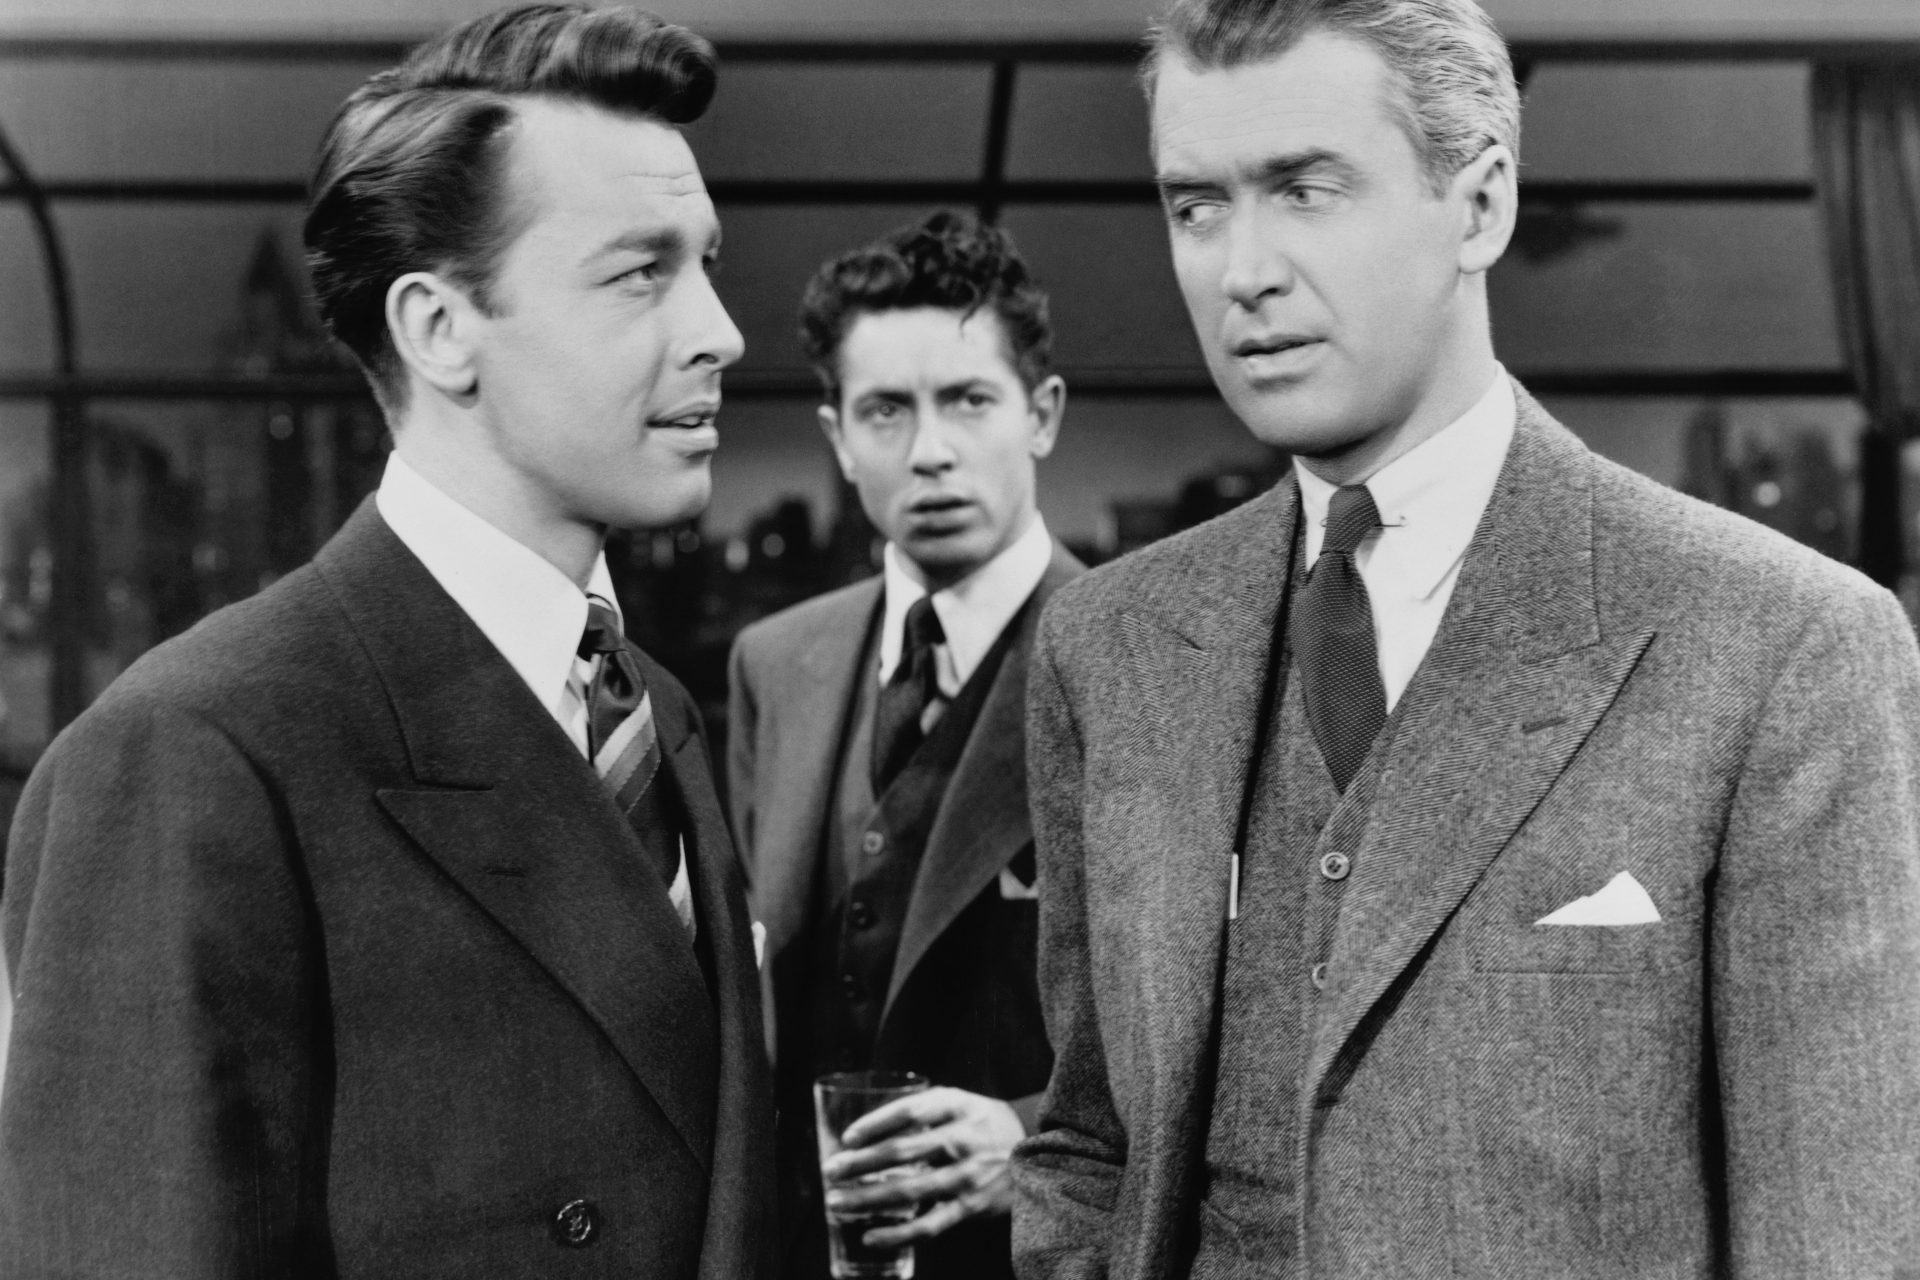 John Dall y Farley Granger en “Rope” (“La soga” / “Festín diabólico” - 1948)